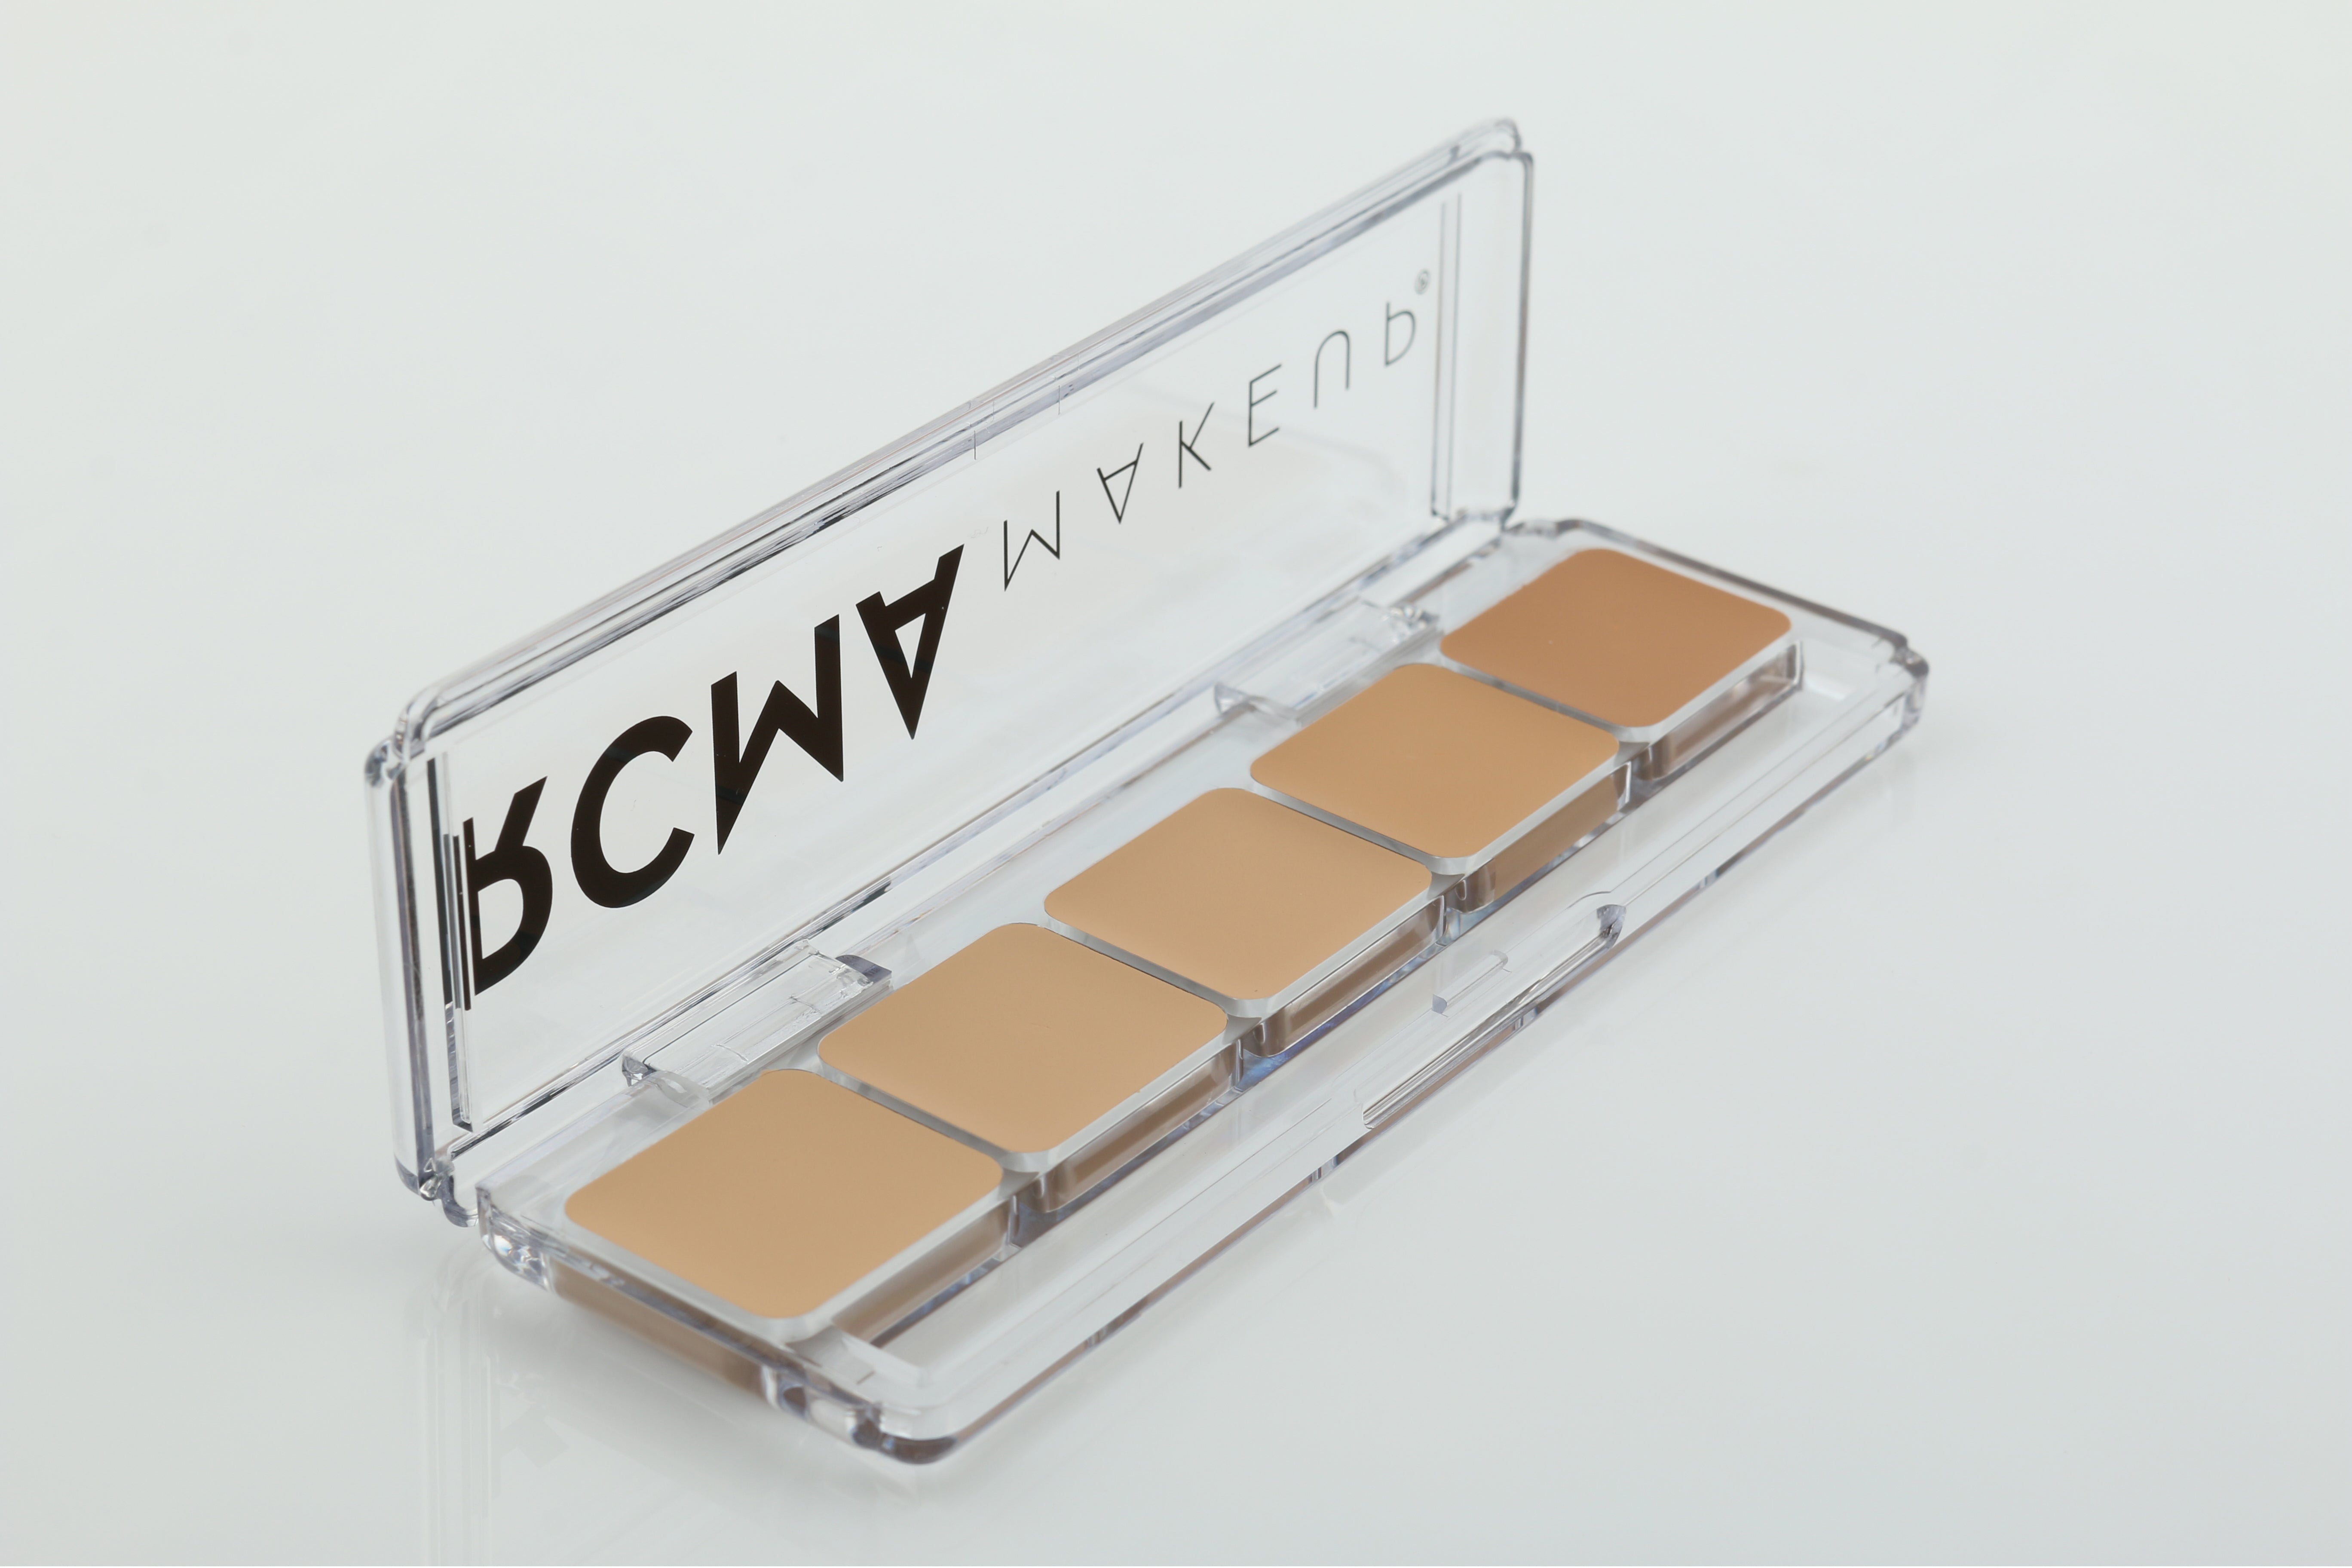 RCMA Makeup Color Process Foundation, MB Series, 5oz